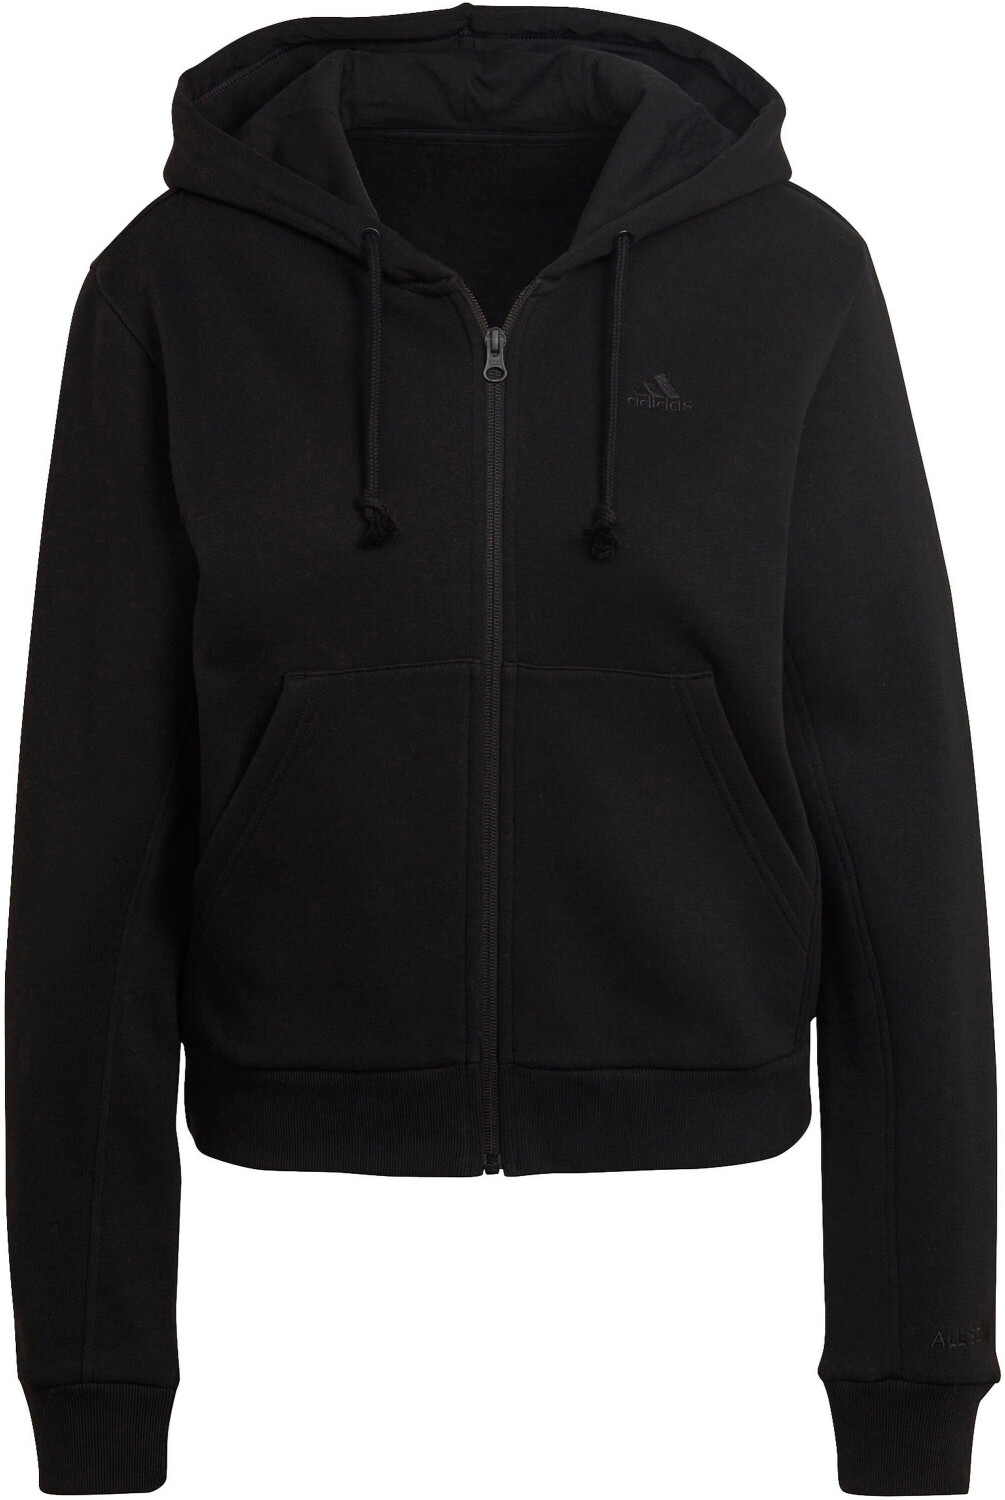 (HC8848) All Szn Sweatjacket ab | black bei 34,95 € Preisvergleich Adidas